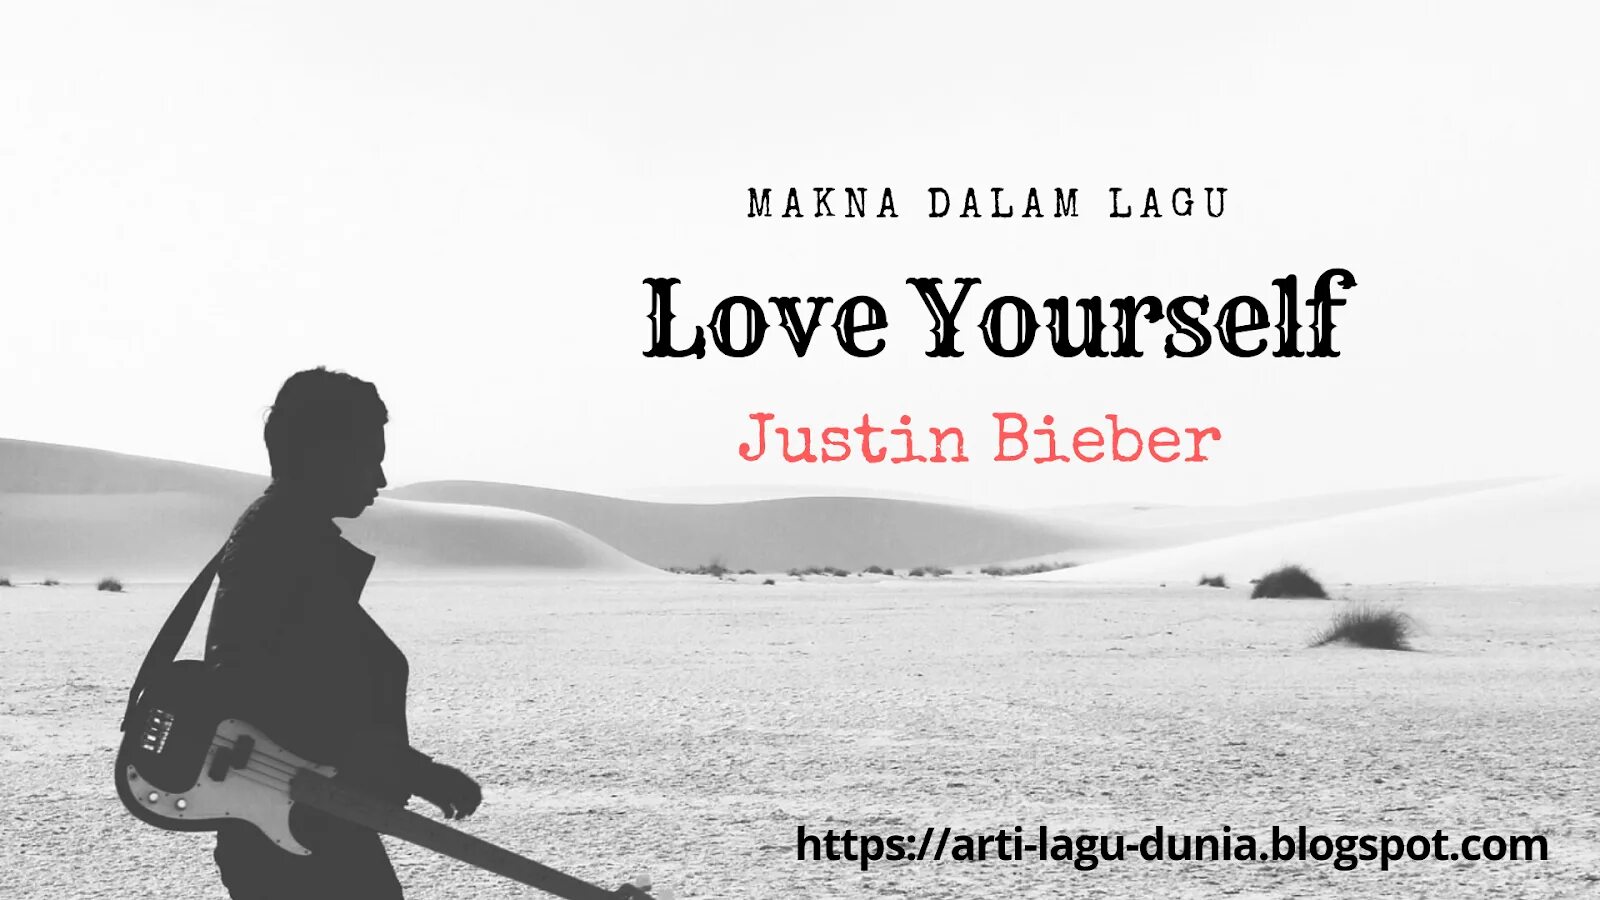 Justin bieber love yourself. Бибер Love yourself. Love yourself Justin Bieber текст. Love yourself Justin Bieber Ноты.